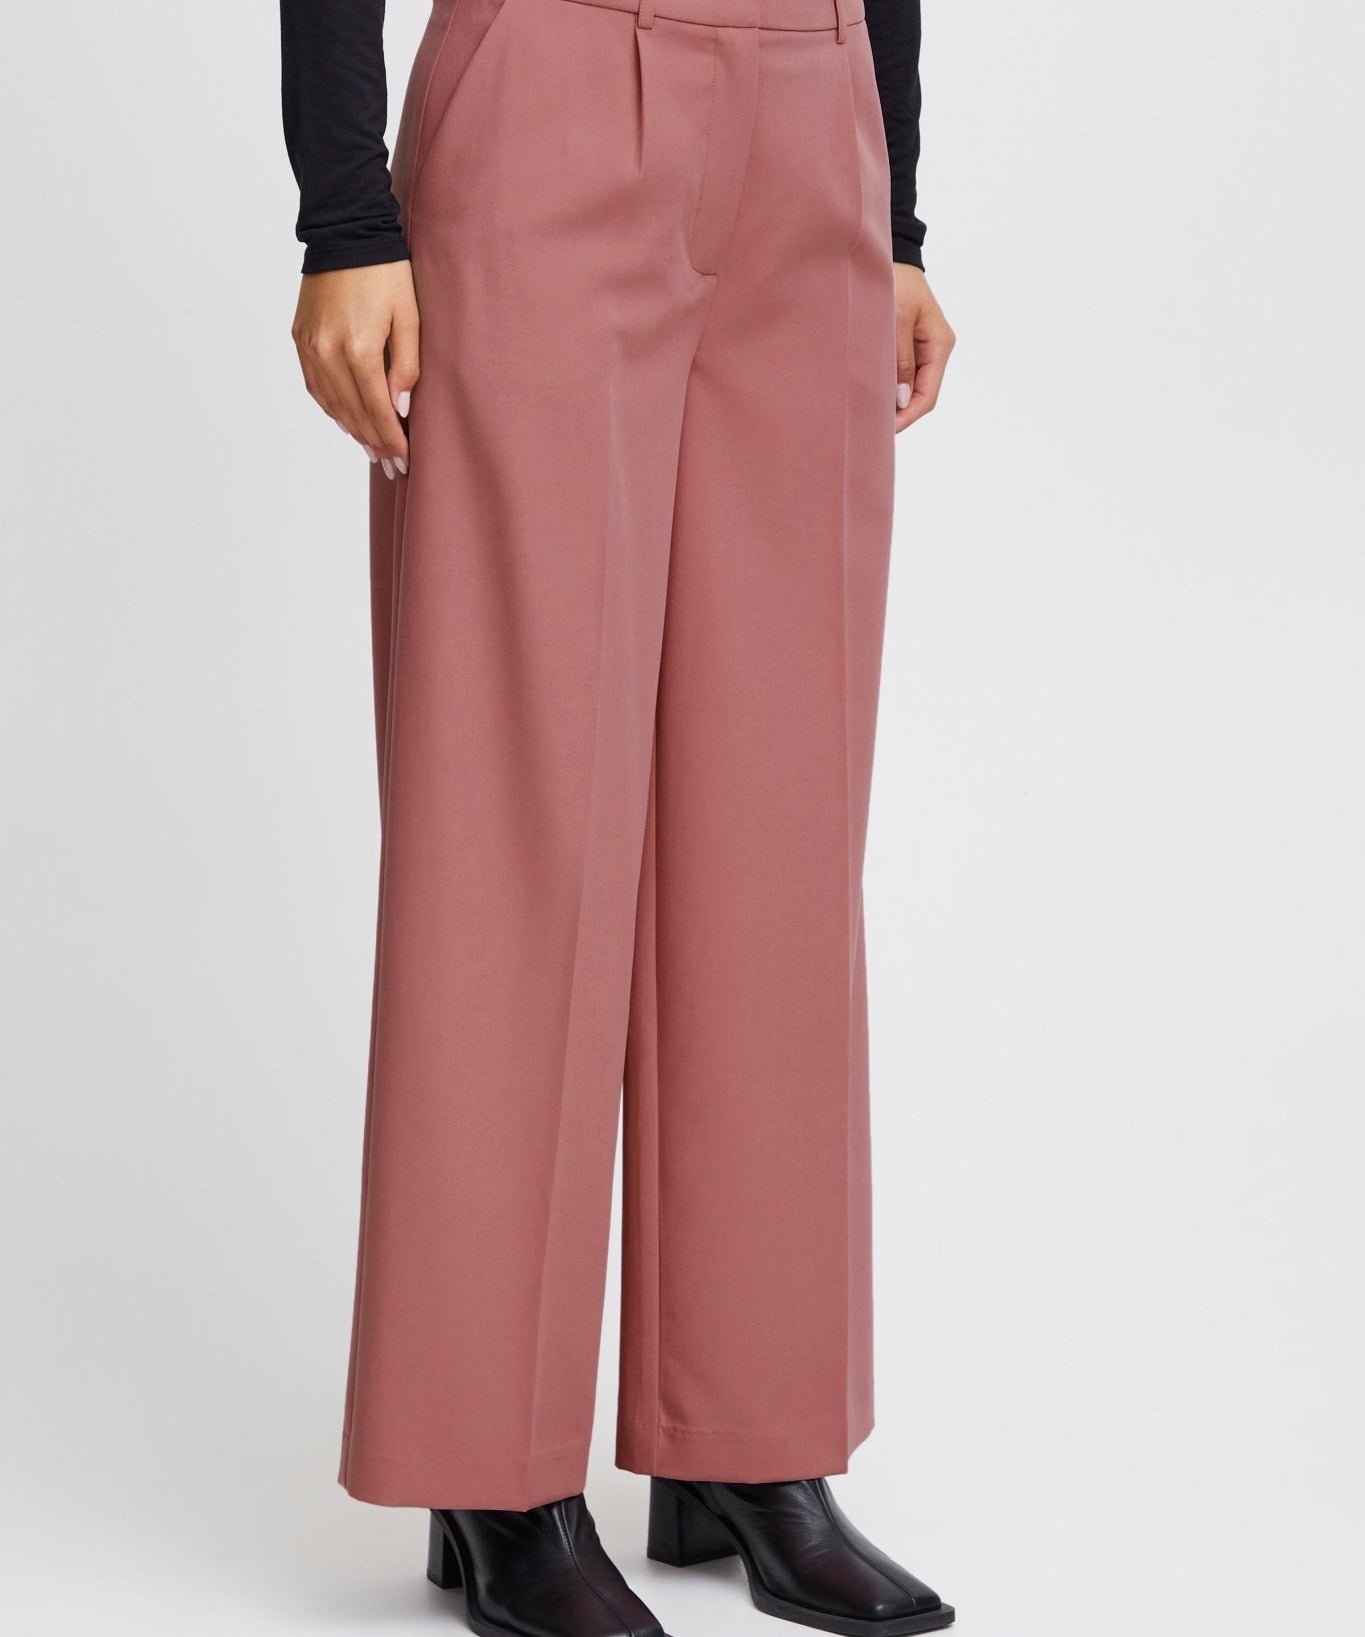 Lexi wide leg trousers - heather rose - Blue Sky Fashions & Lingerie